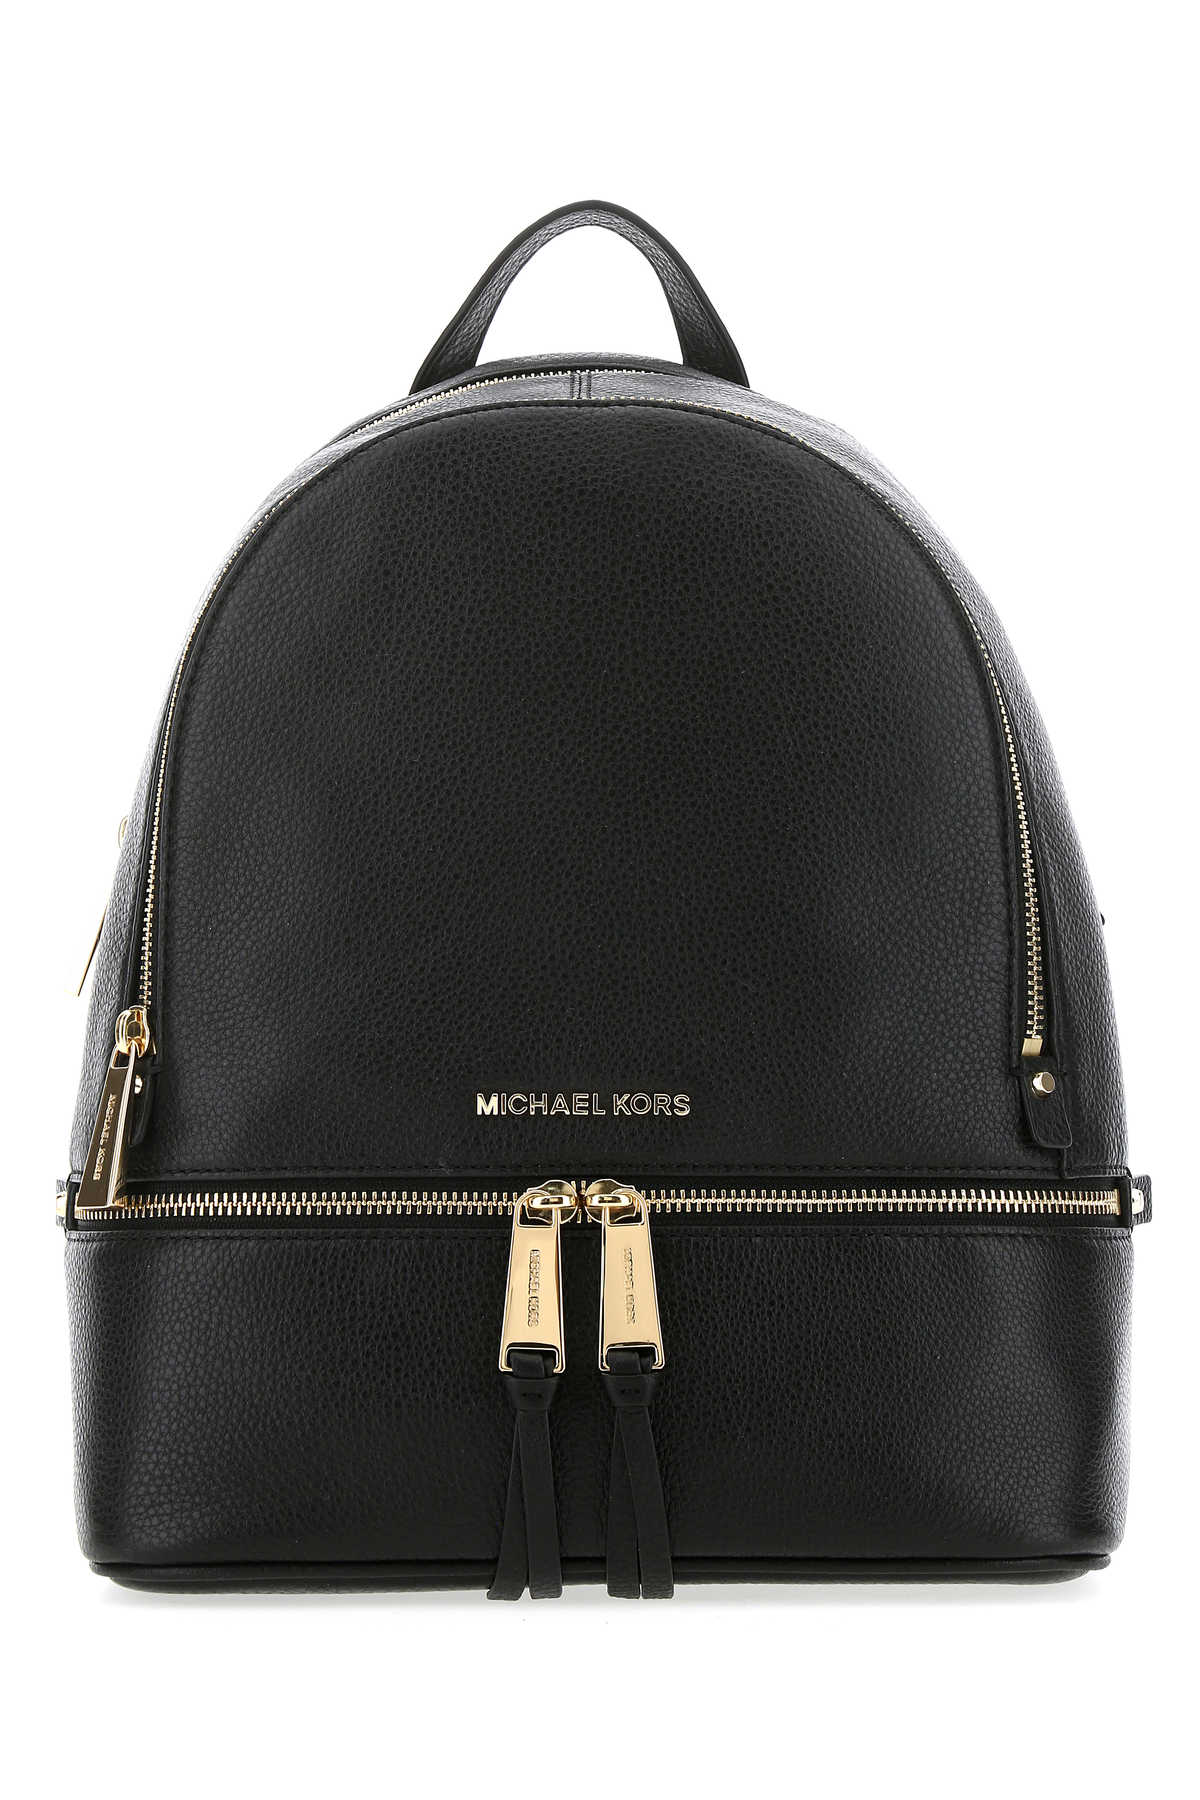 Shop Michael Kors Black Leather Medium Rhea Backpack